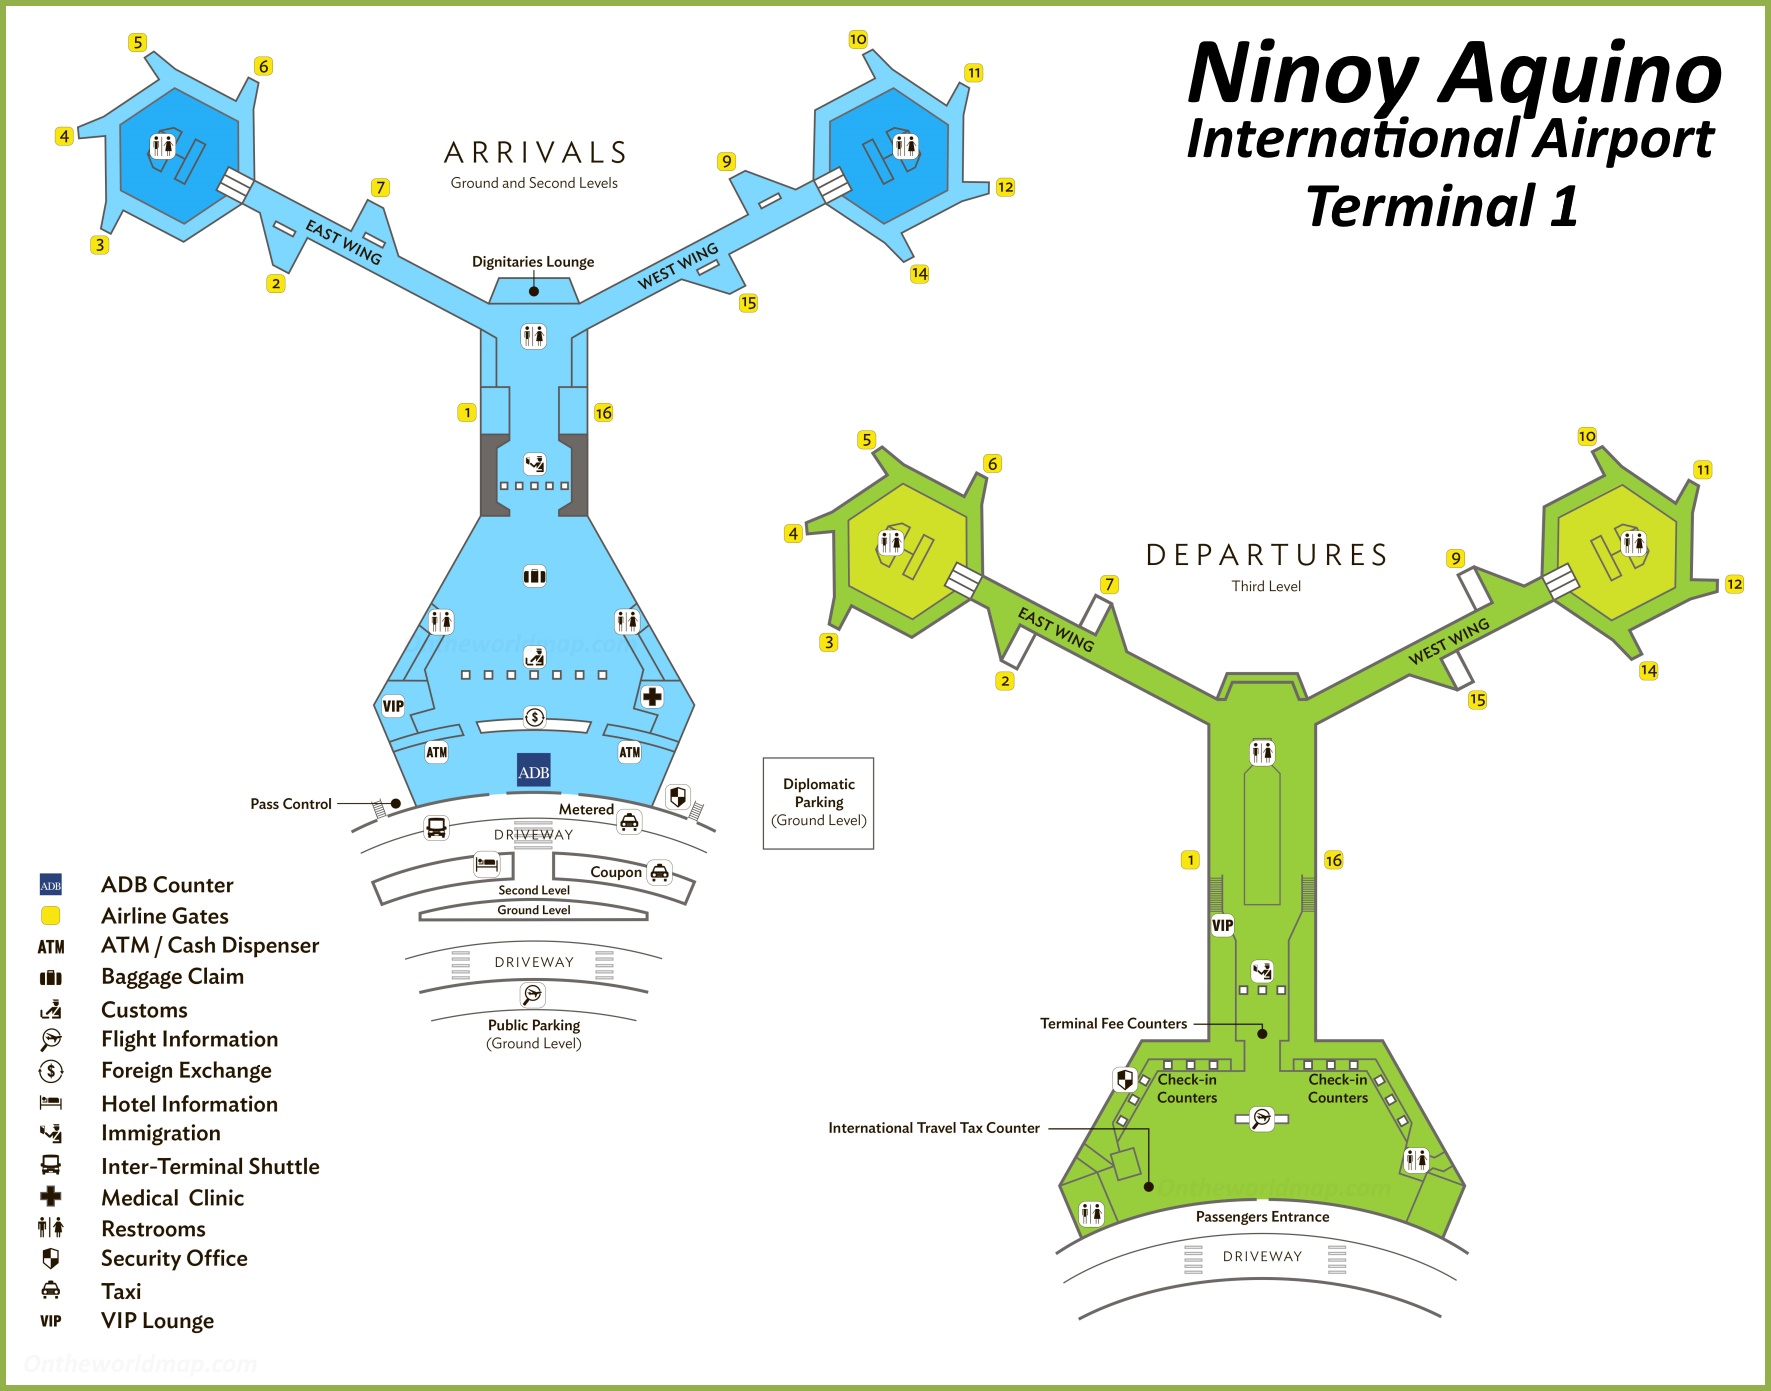 Ninoy Aquino International Airport Terminal 1 Map 